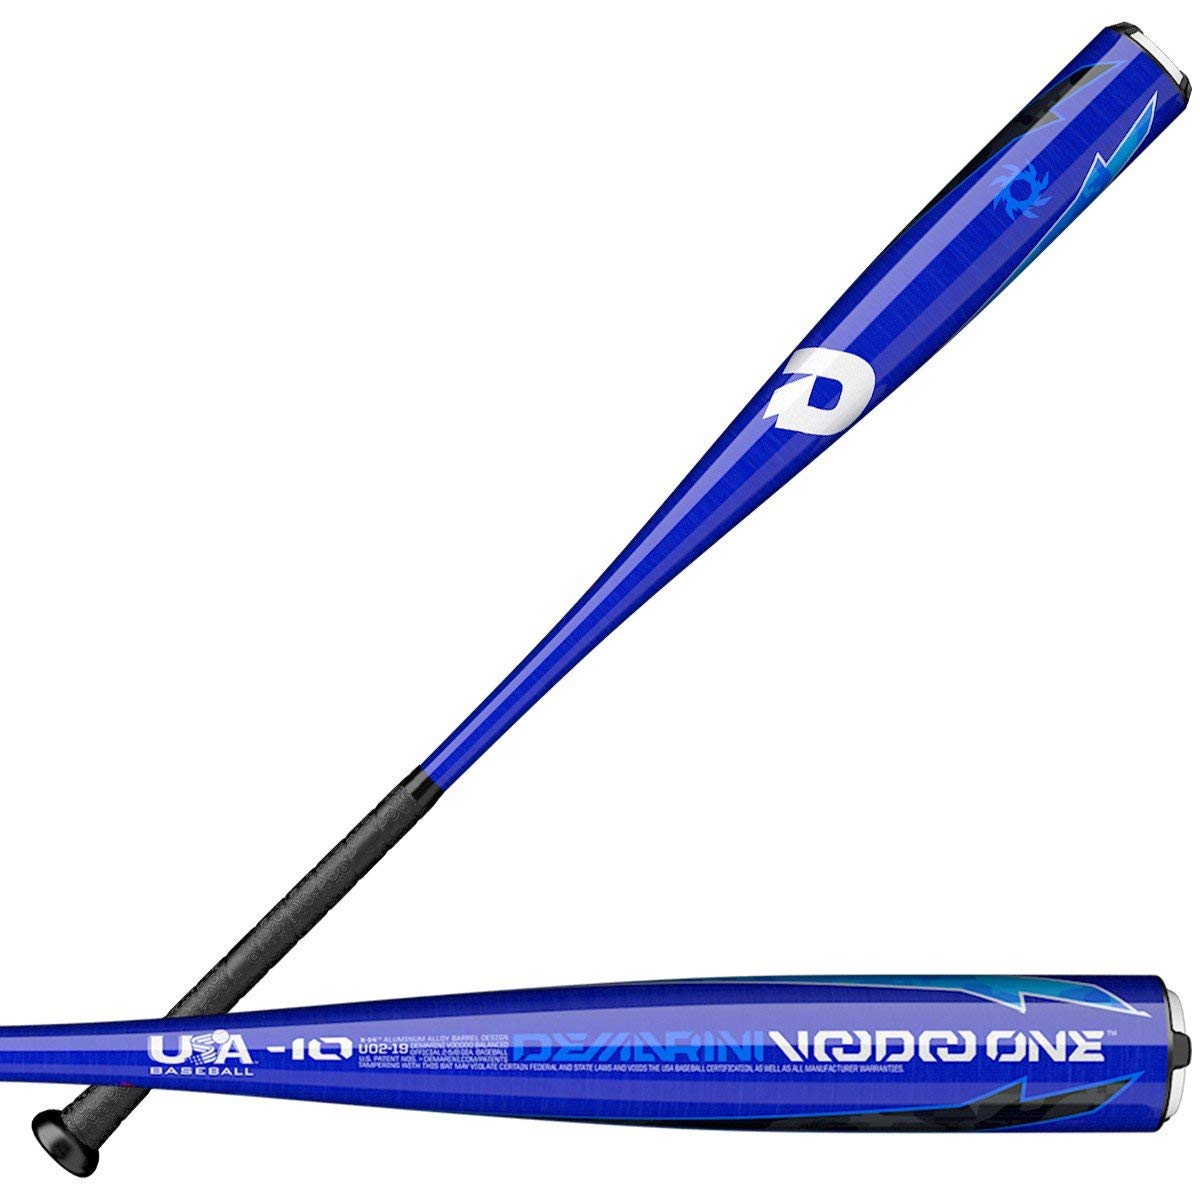 demarini-2019-voodoo-one-balanced-10-usa-baseball-bat-30-inch-20-oz WTDXUO22030-19 DeMarini 887768711924 `-10 Length to Weight Ratio Balanced Swing Weight One-Piece 100% X14